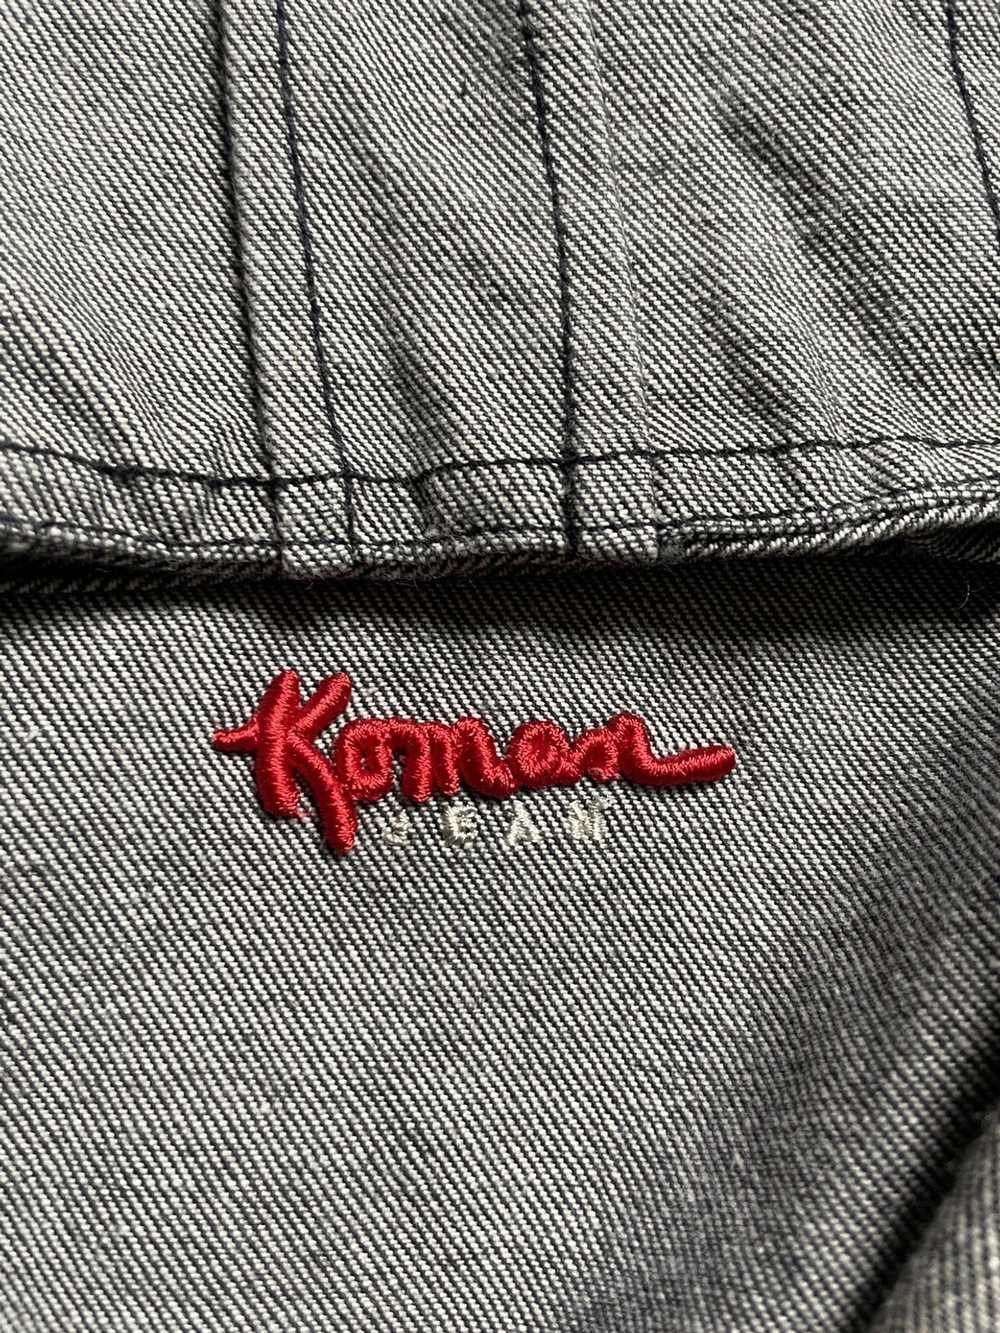 Koman Koman raw denim jacket - image 3